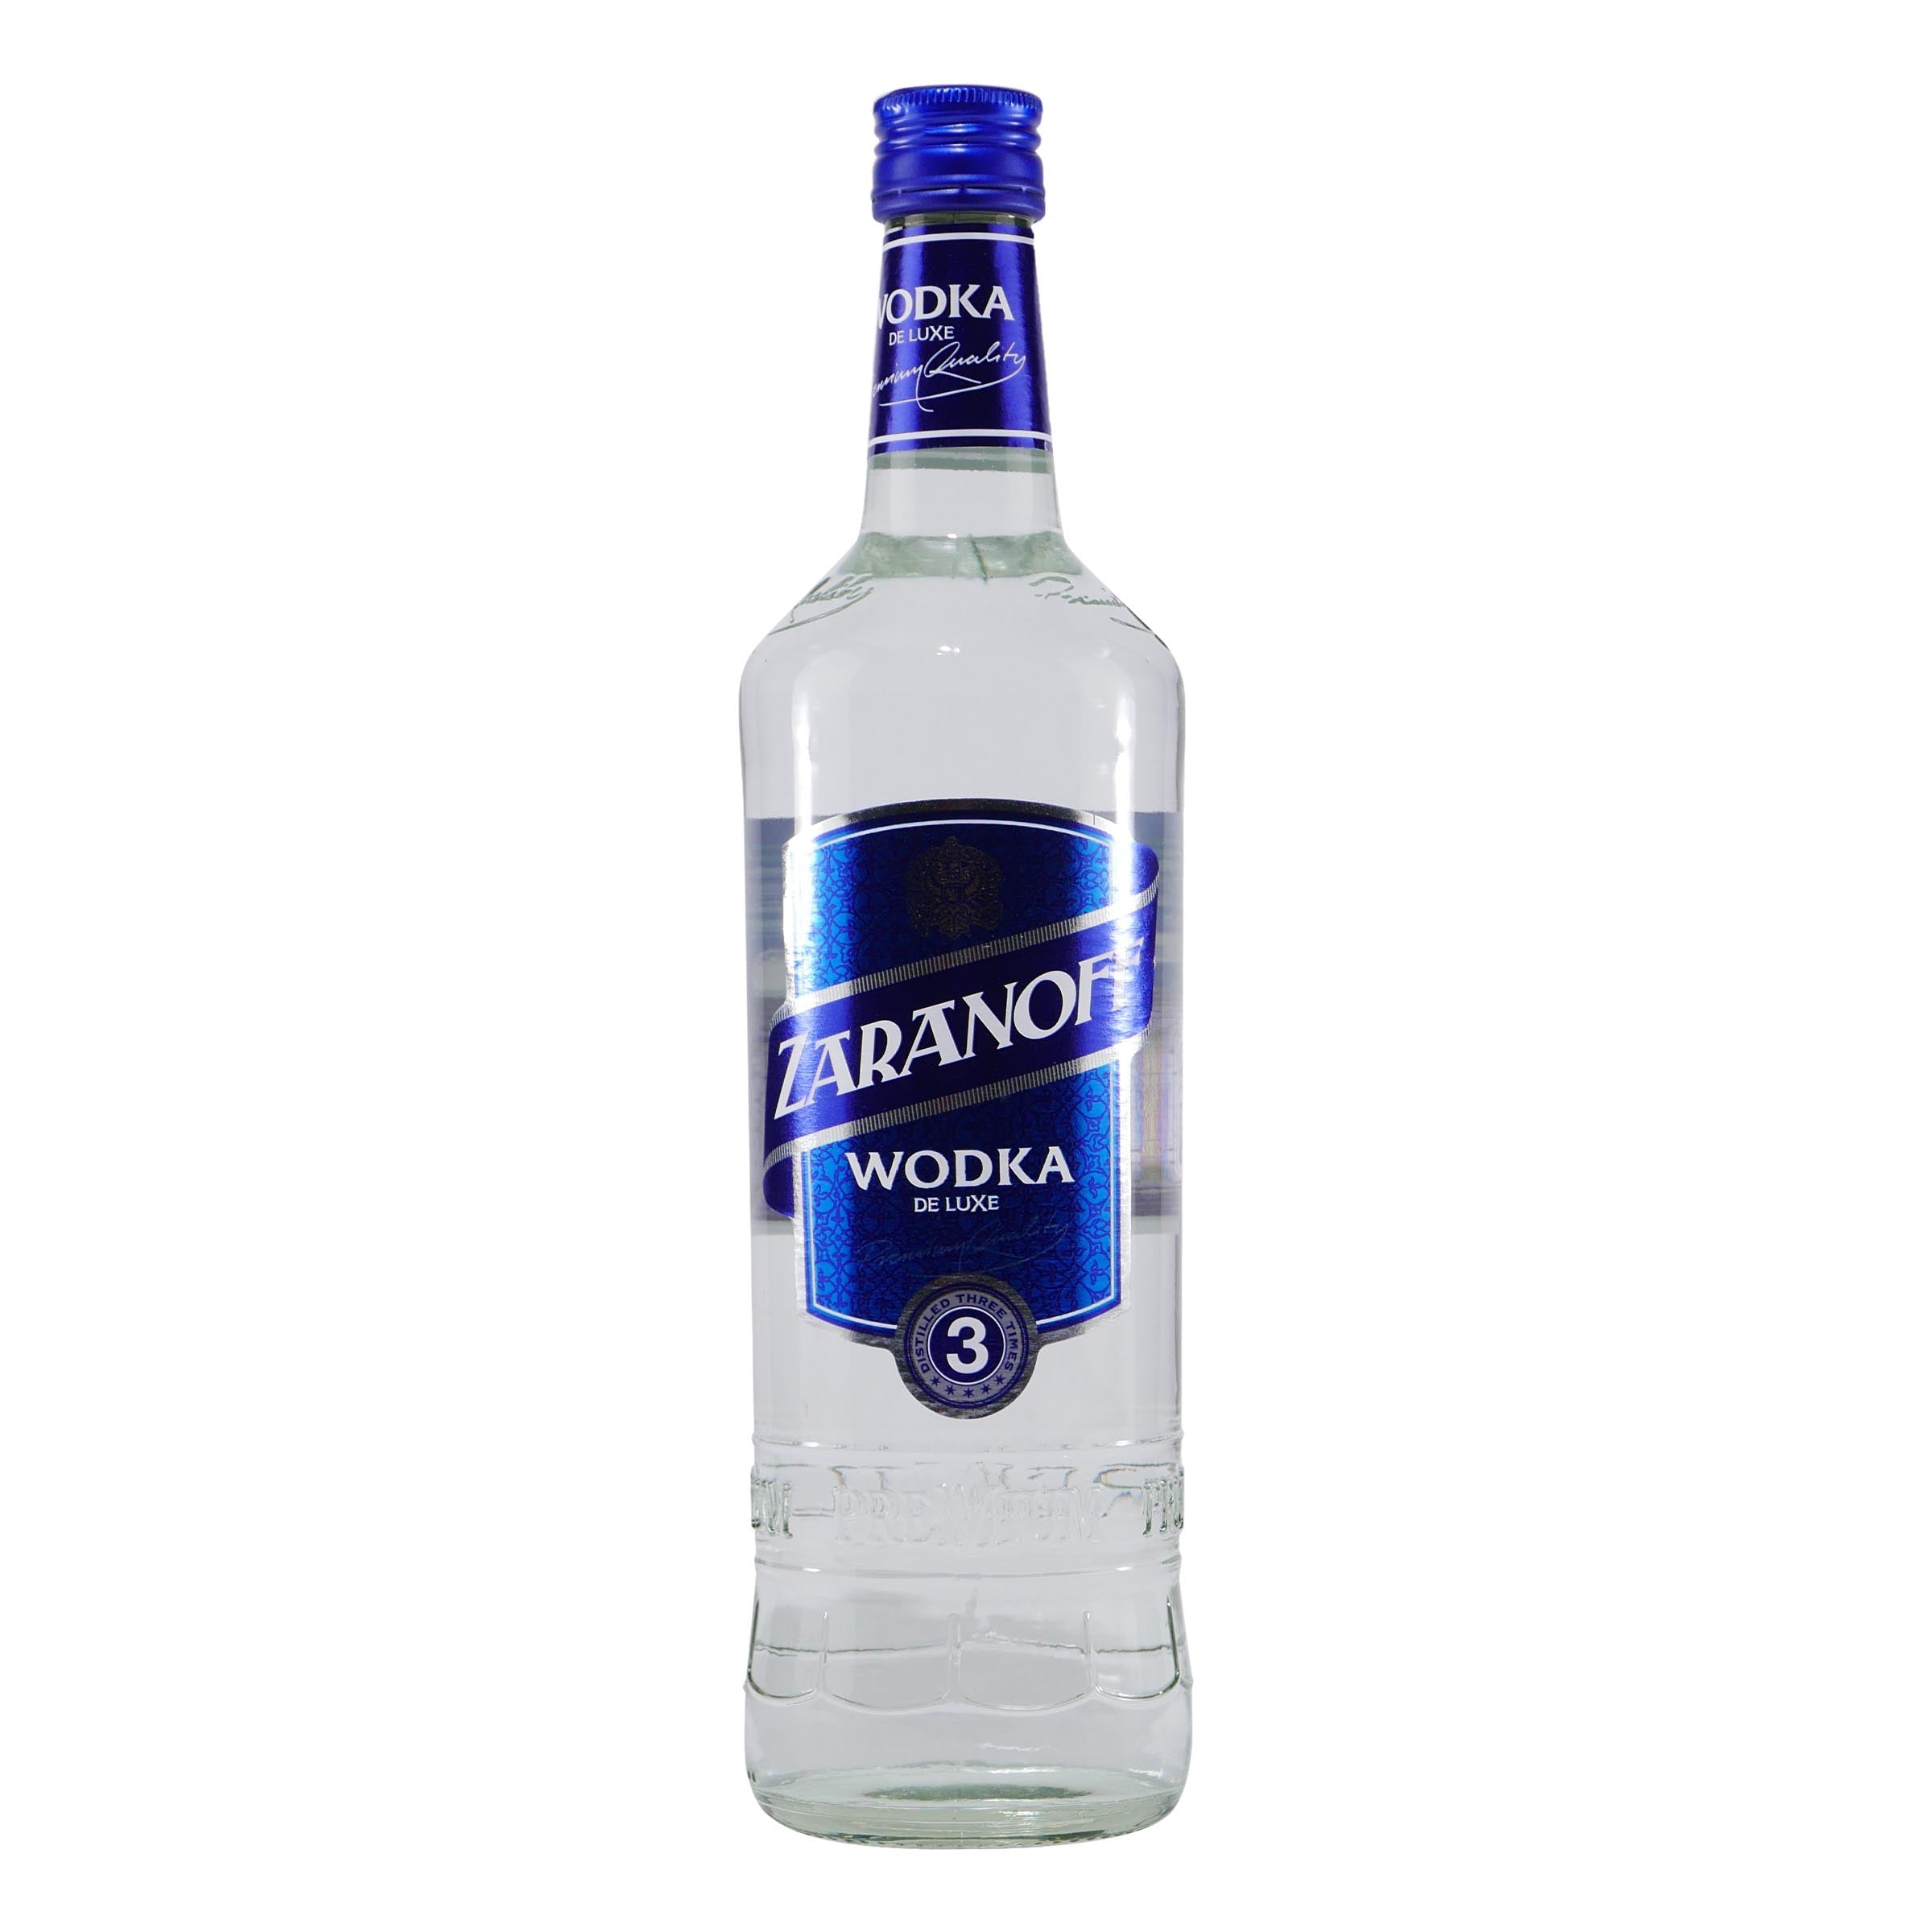 Zaranoff Wodka